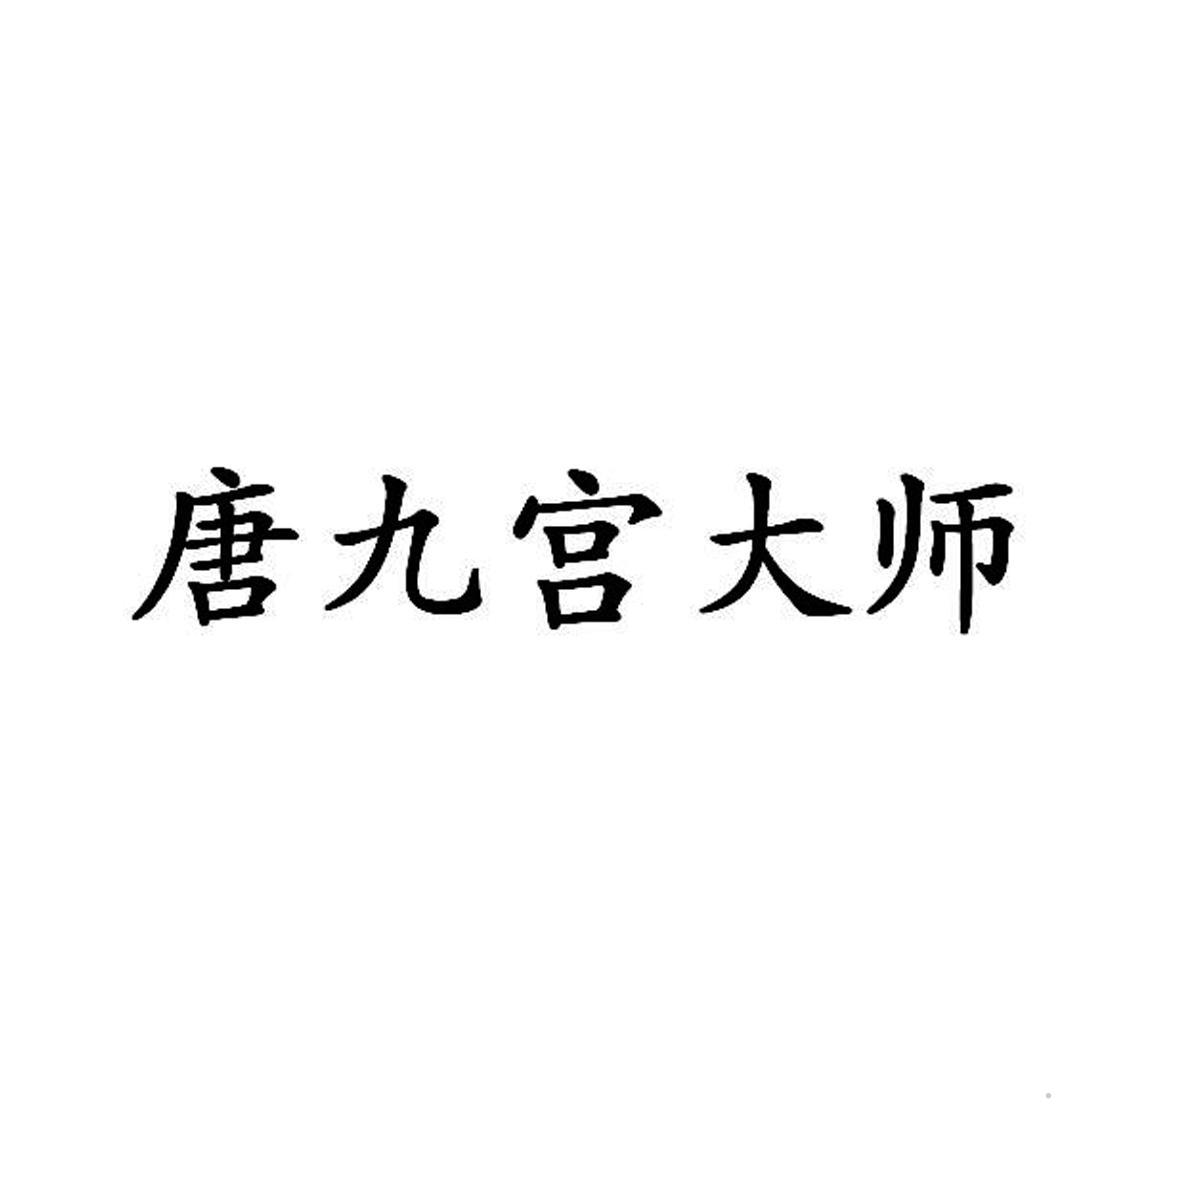 唐九宫大师logo